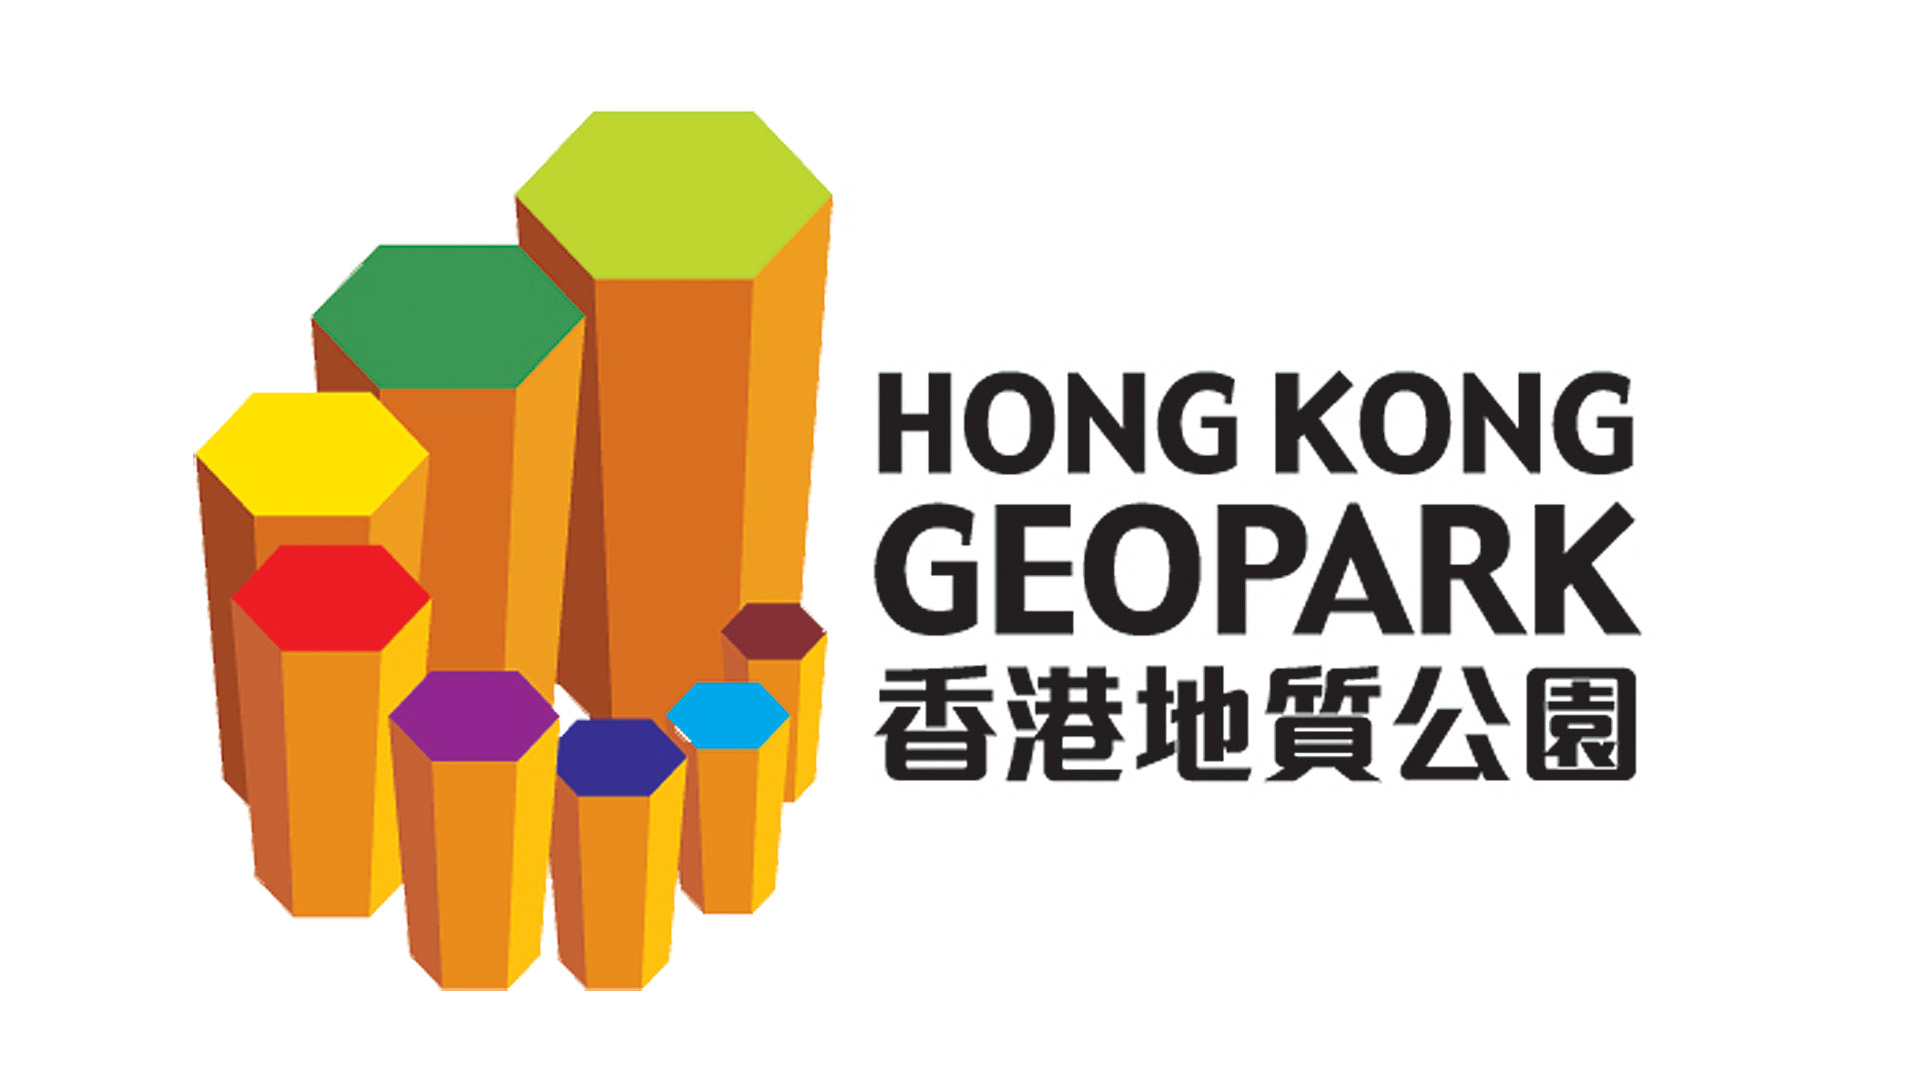 HK Geopark Logo